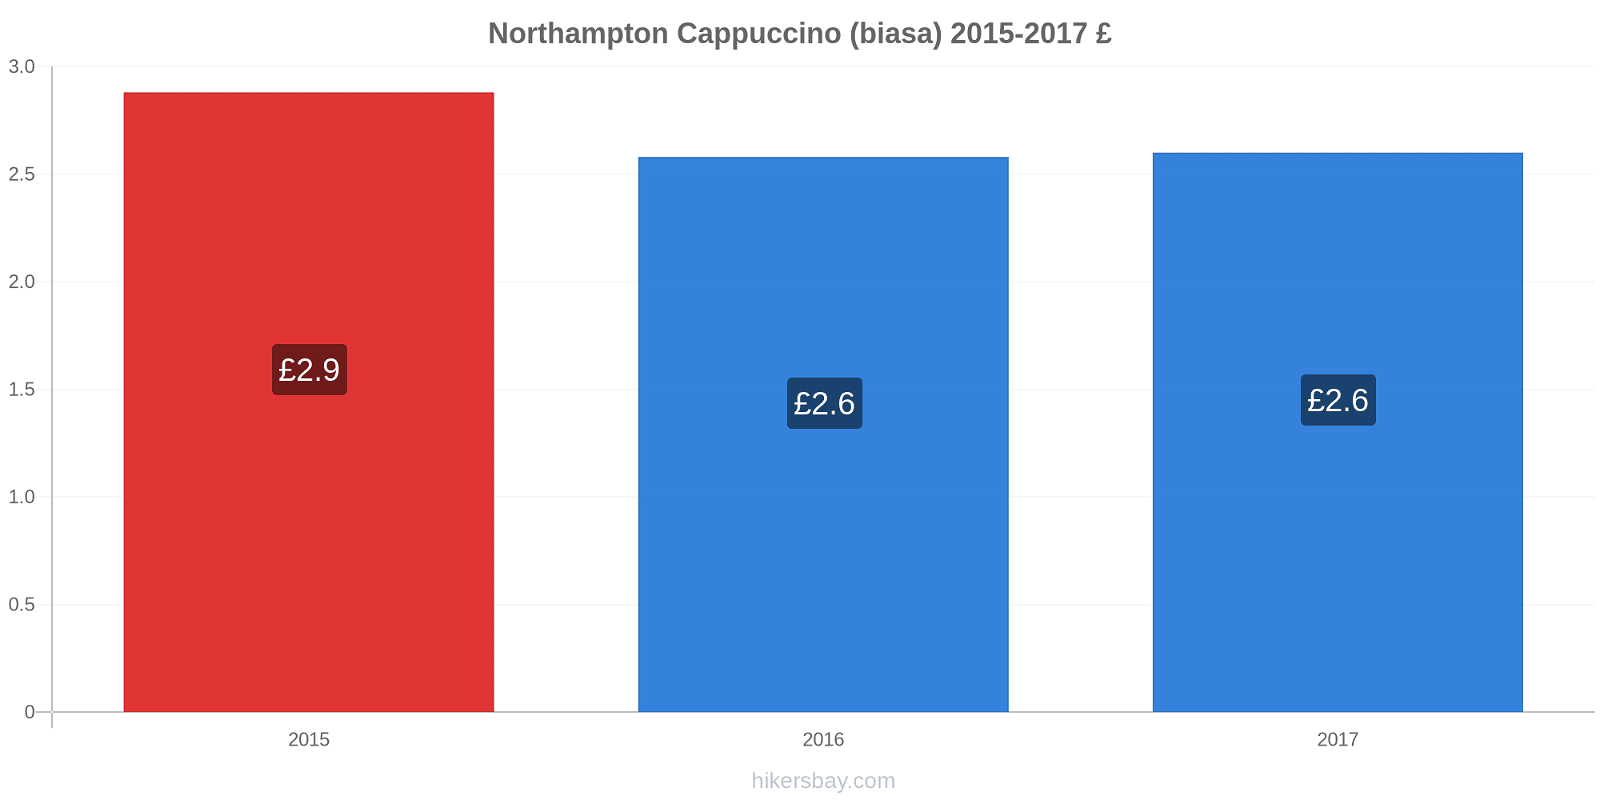 Northampton perubahan harga Cappuccino (biasa) hikersbay.com